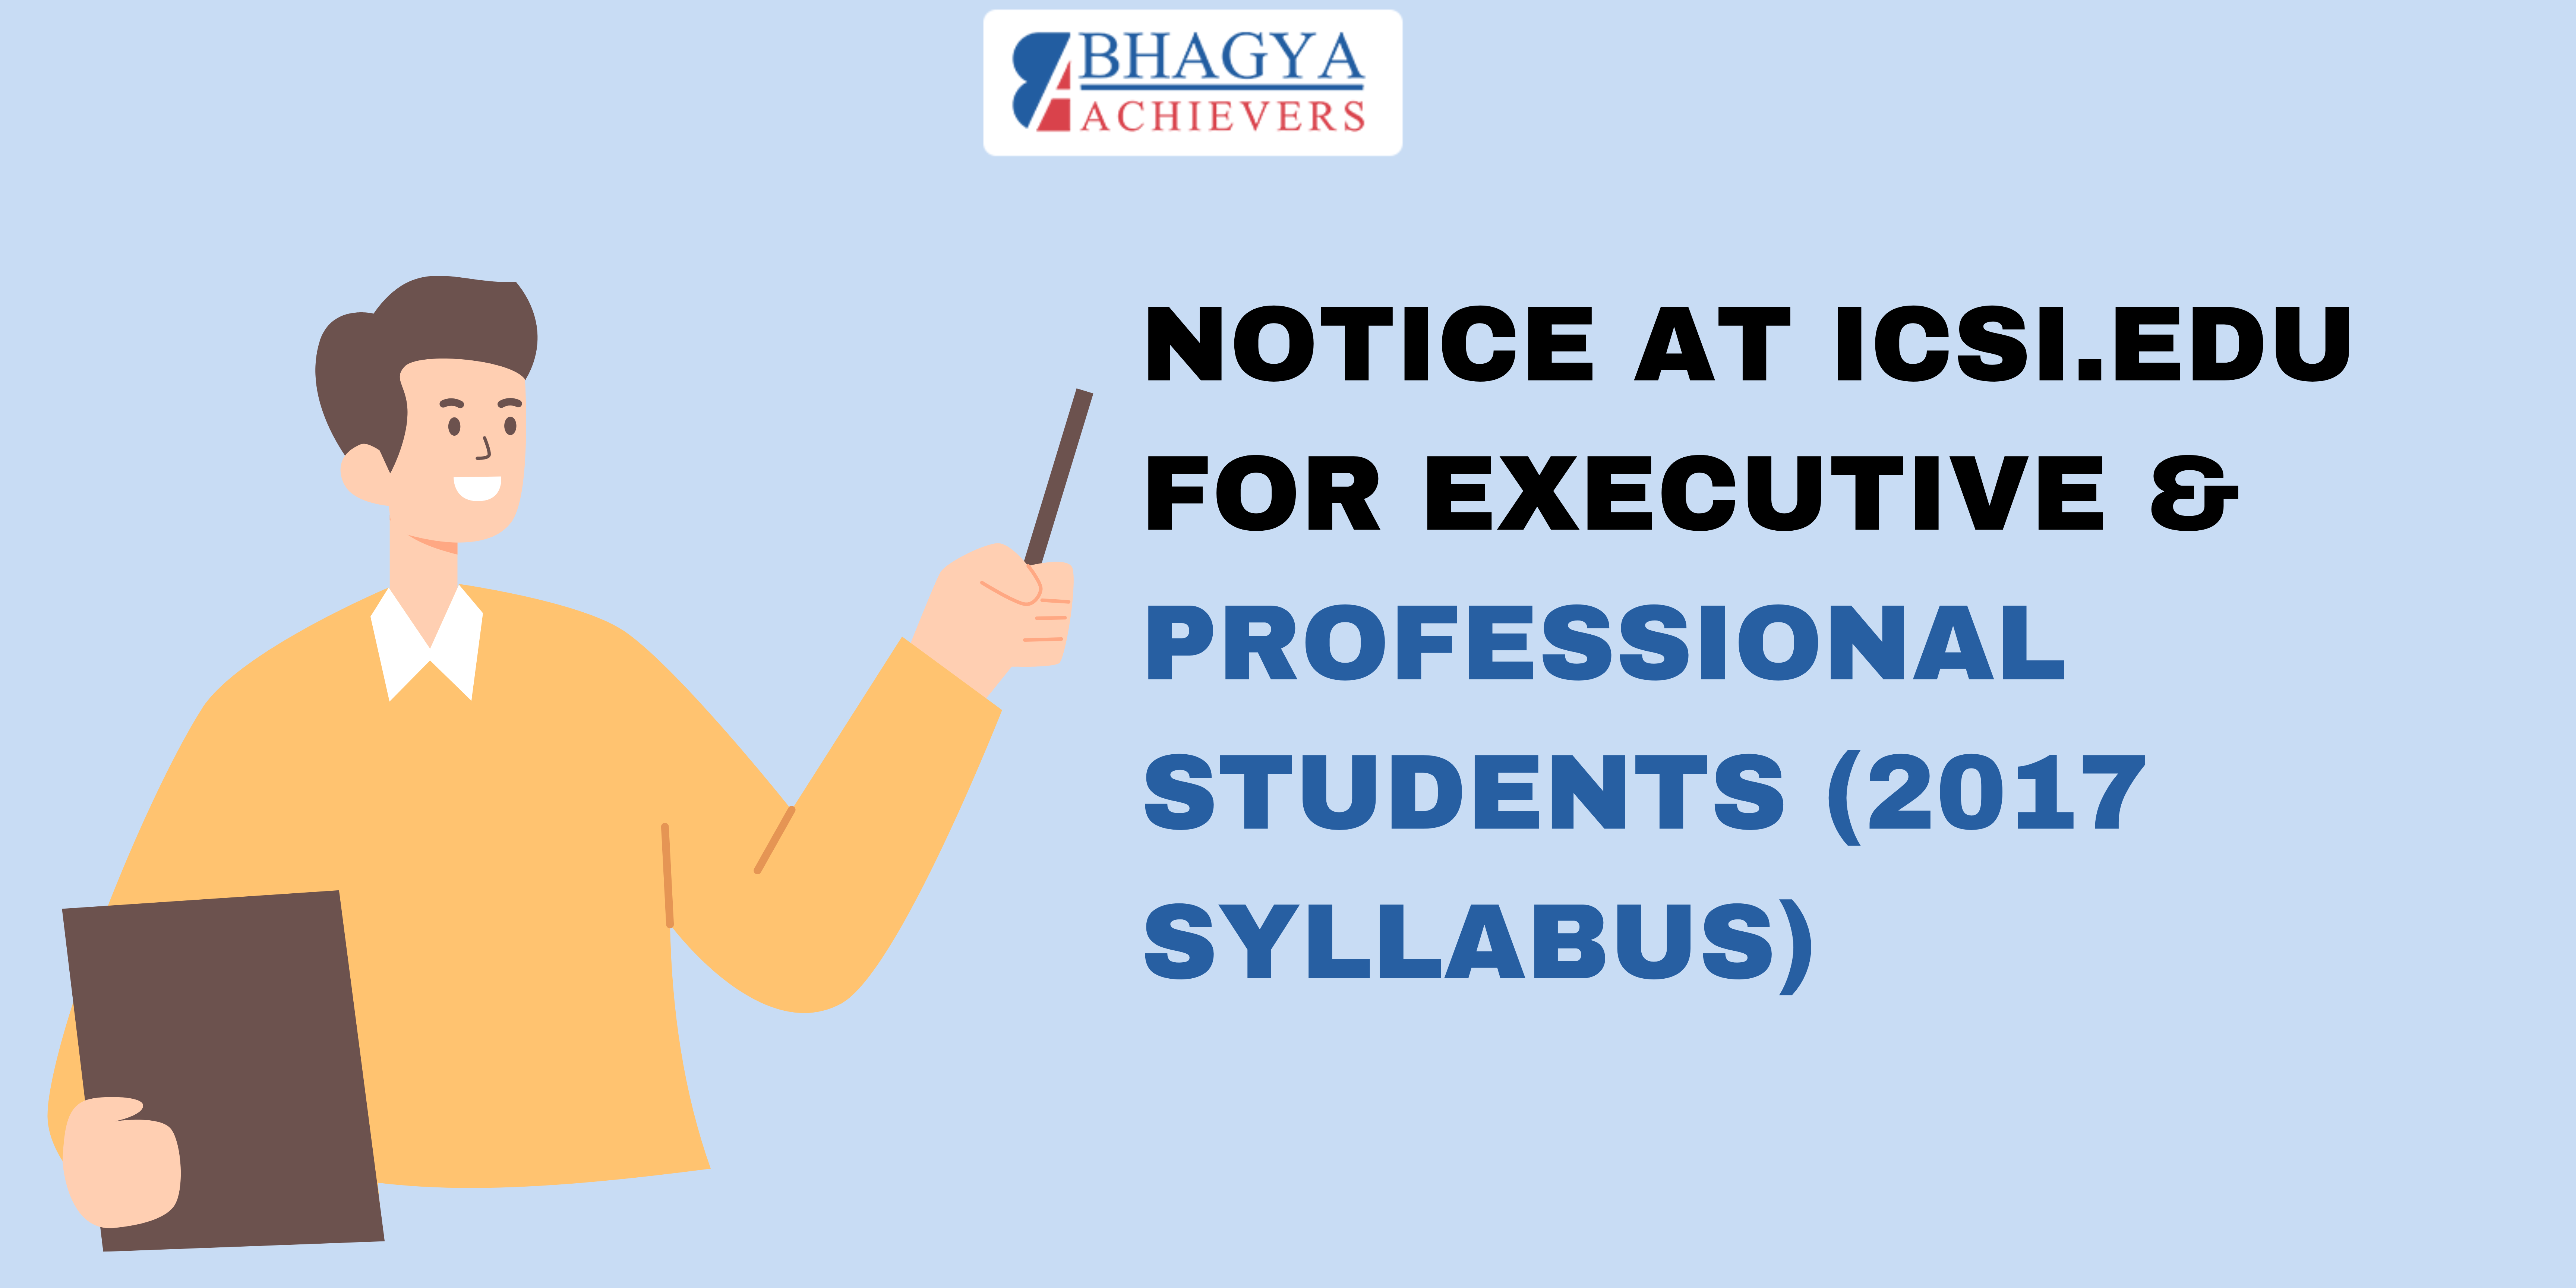 Notice at ICSI. Edu for Executive & Professional Students (2017 Syllabus) - Bhagya Achievers